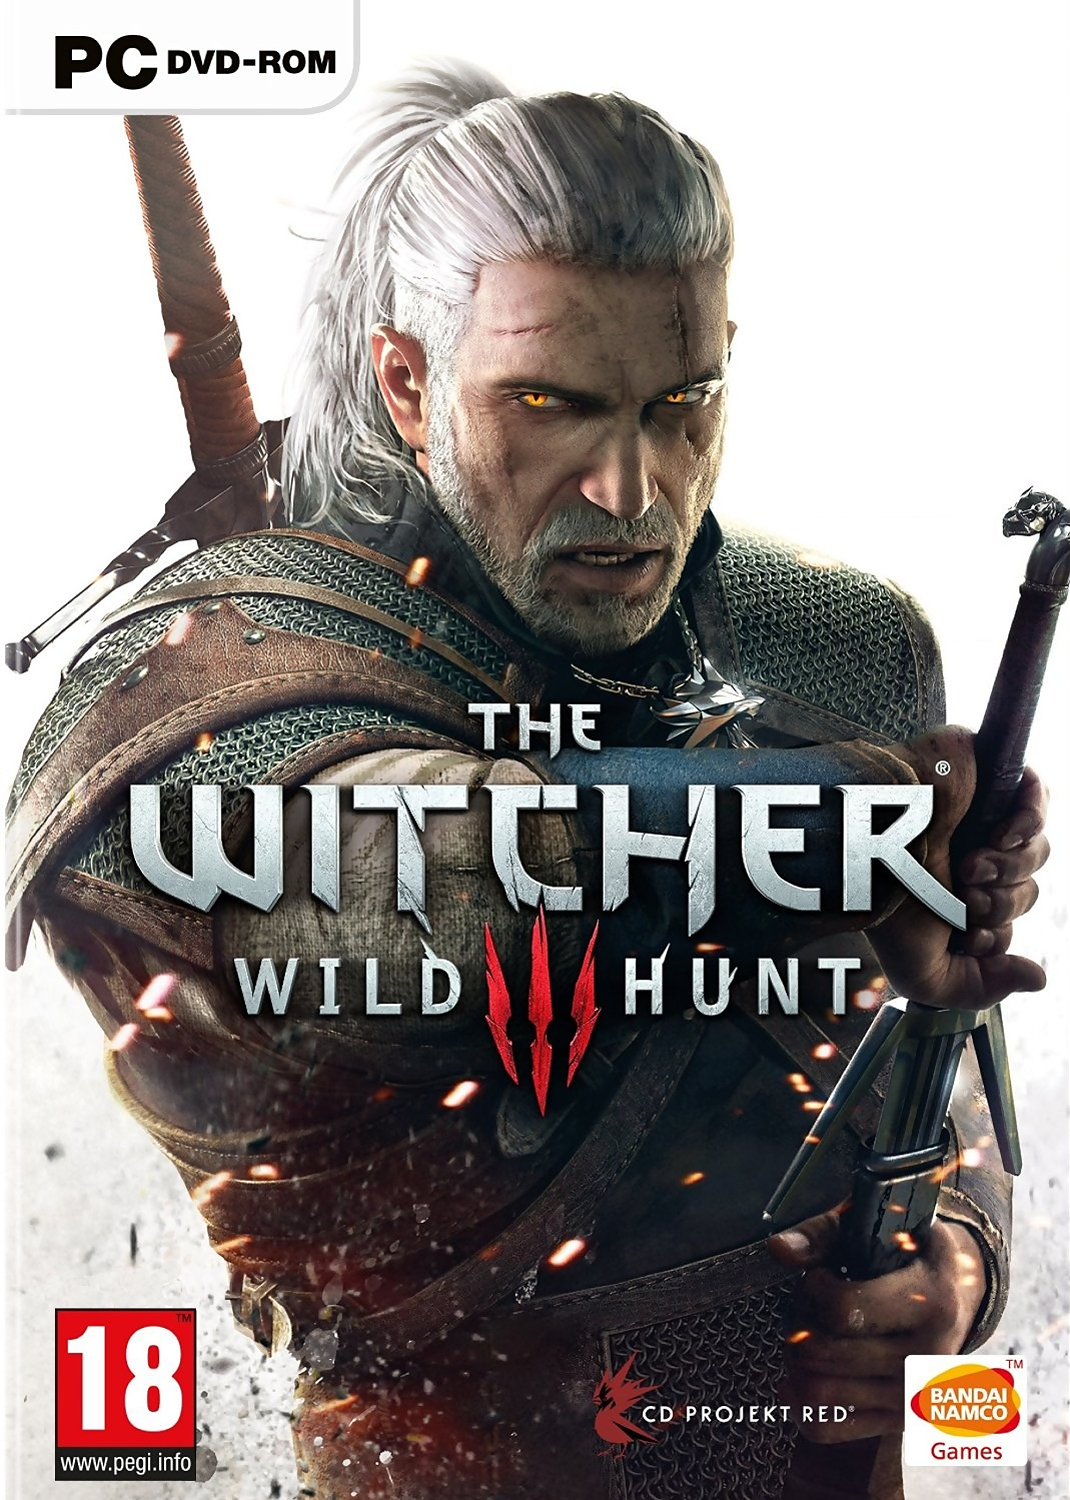 The Witcher 3: Wild Hunt, Witcher Wiki